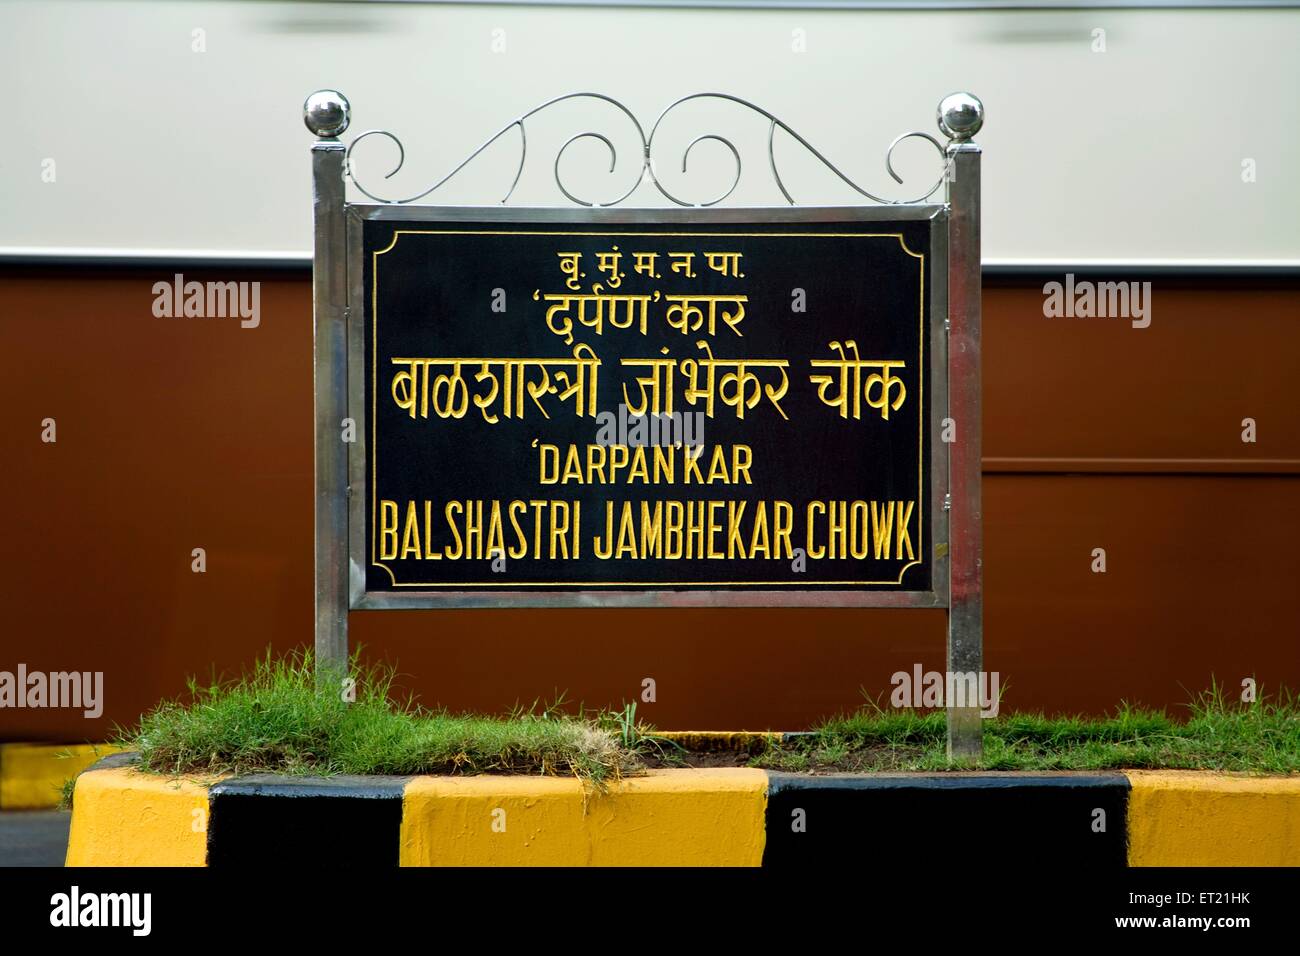 Darpankar Balshastri Jambhekar Chowk, street sign, Bombay, Mumbai, Maharashtra, India, Asia, Asian, Indian Stock Photo